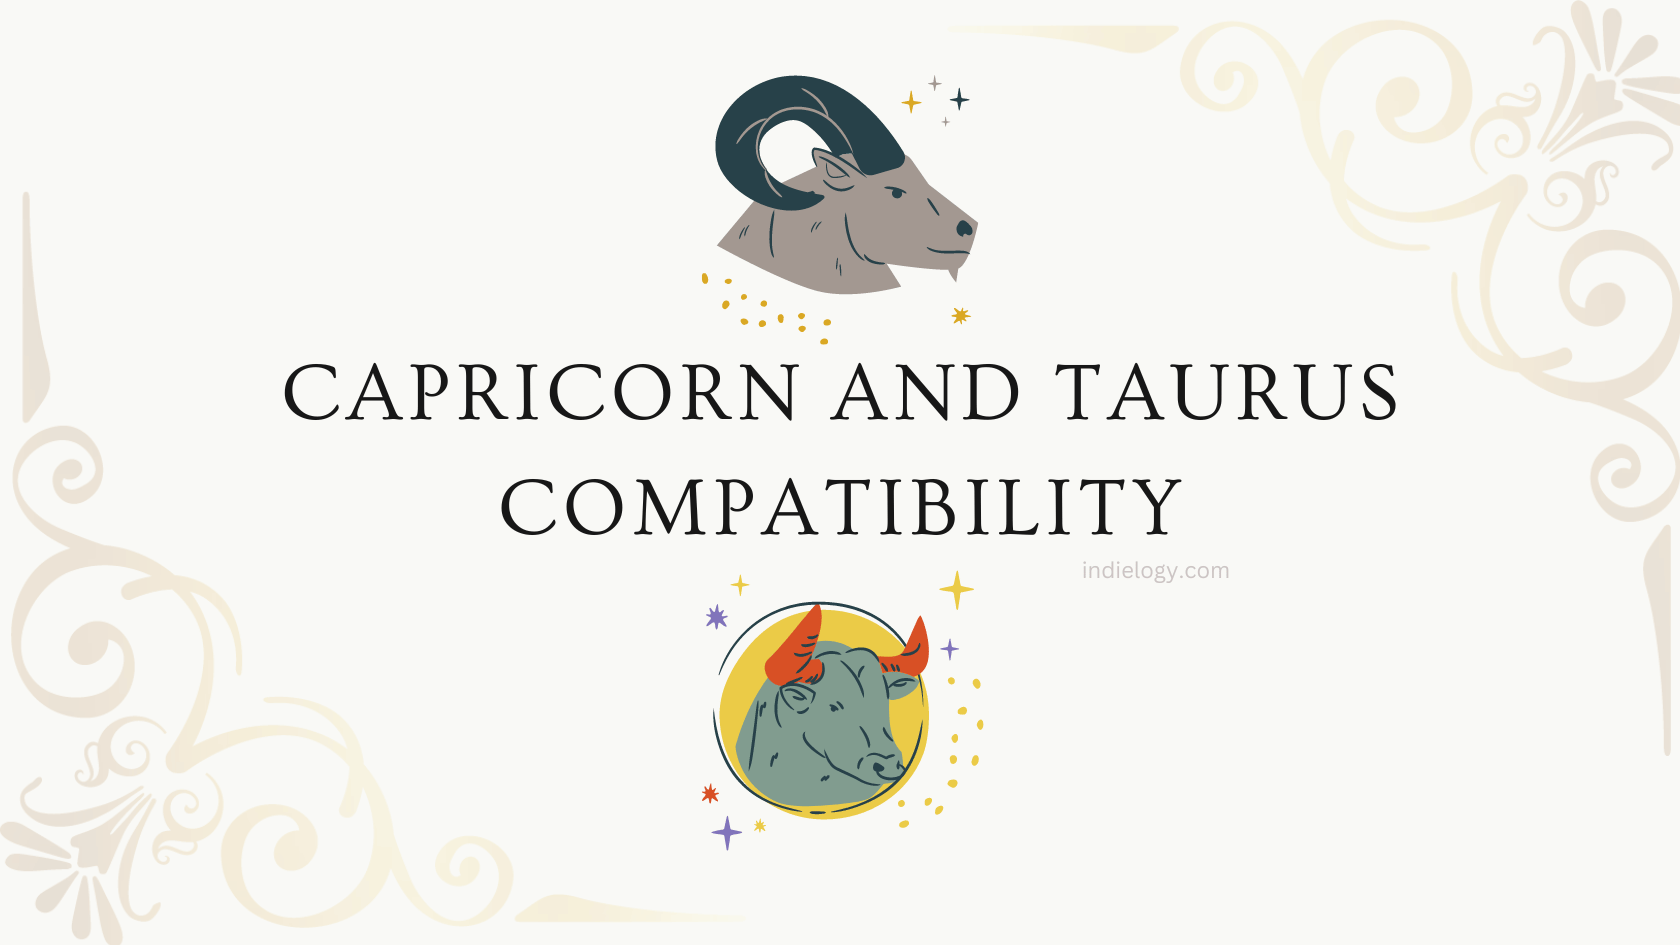 Capricorn and Taurus compatibility